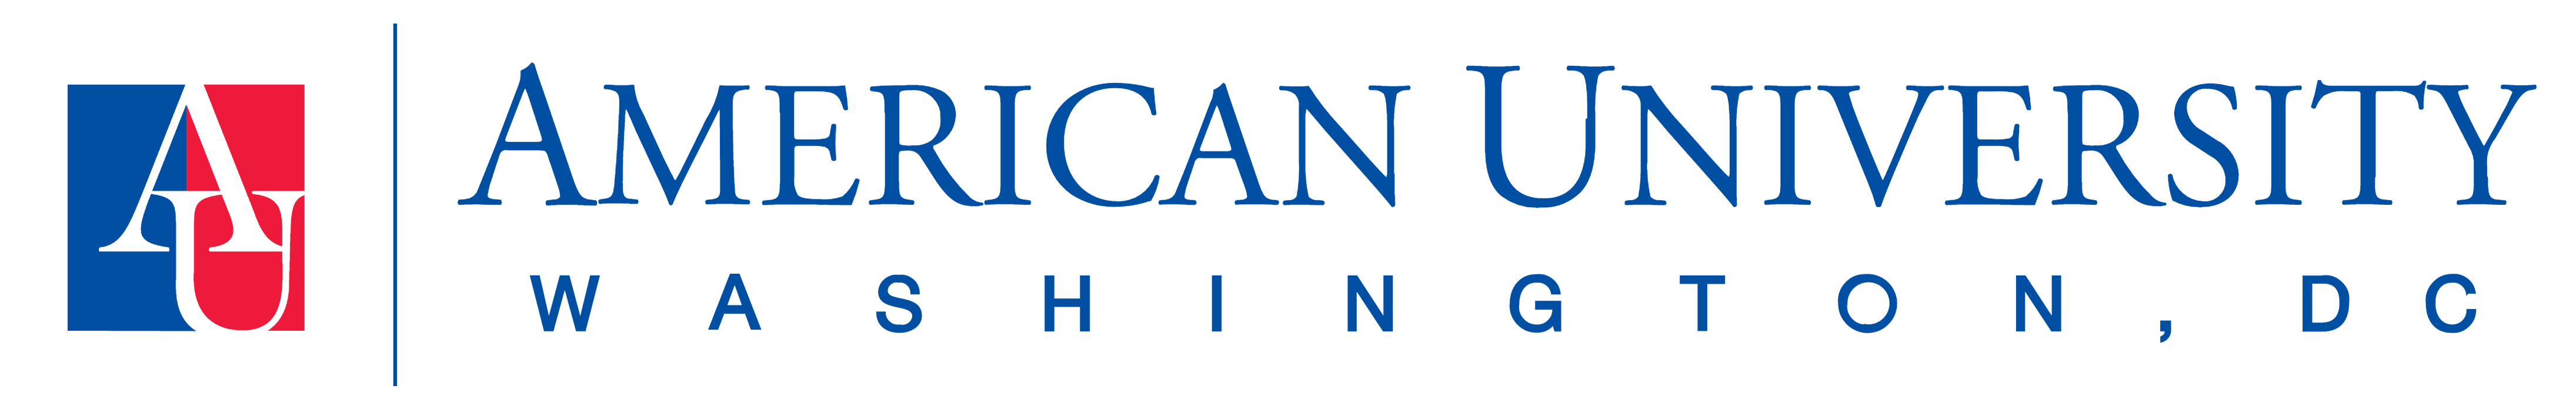 American University Washington D.C. logo, logotype